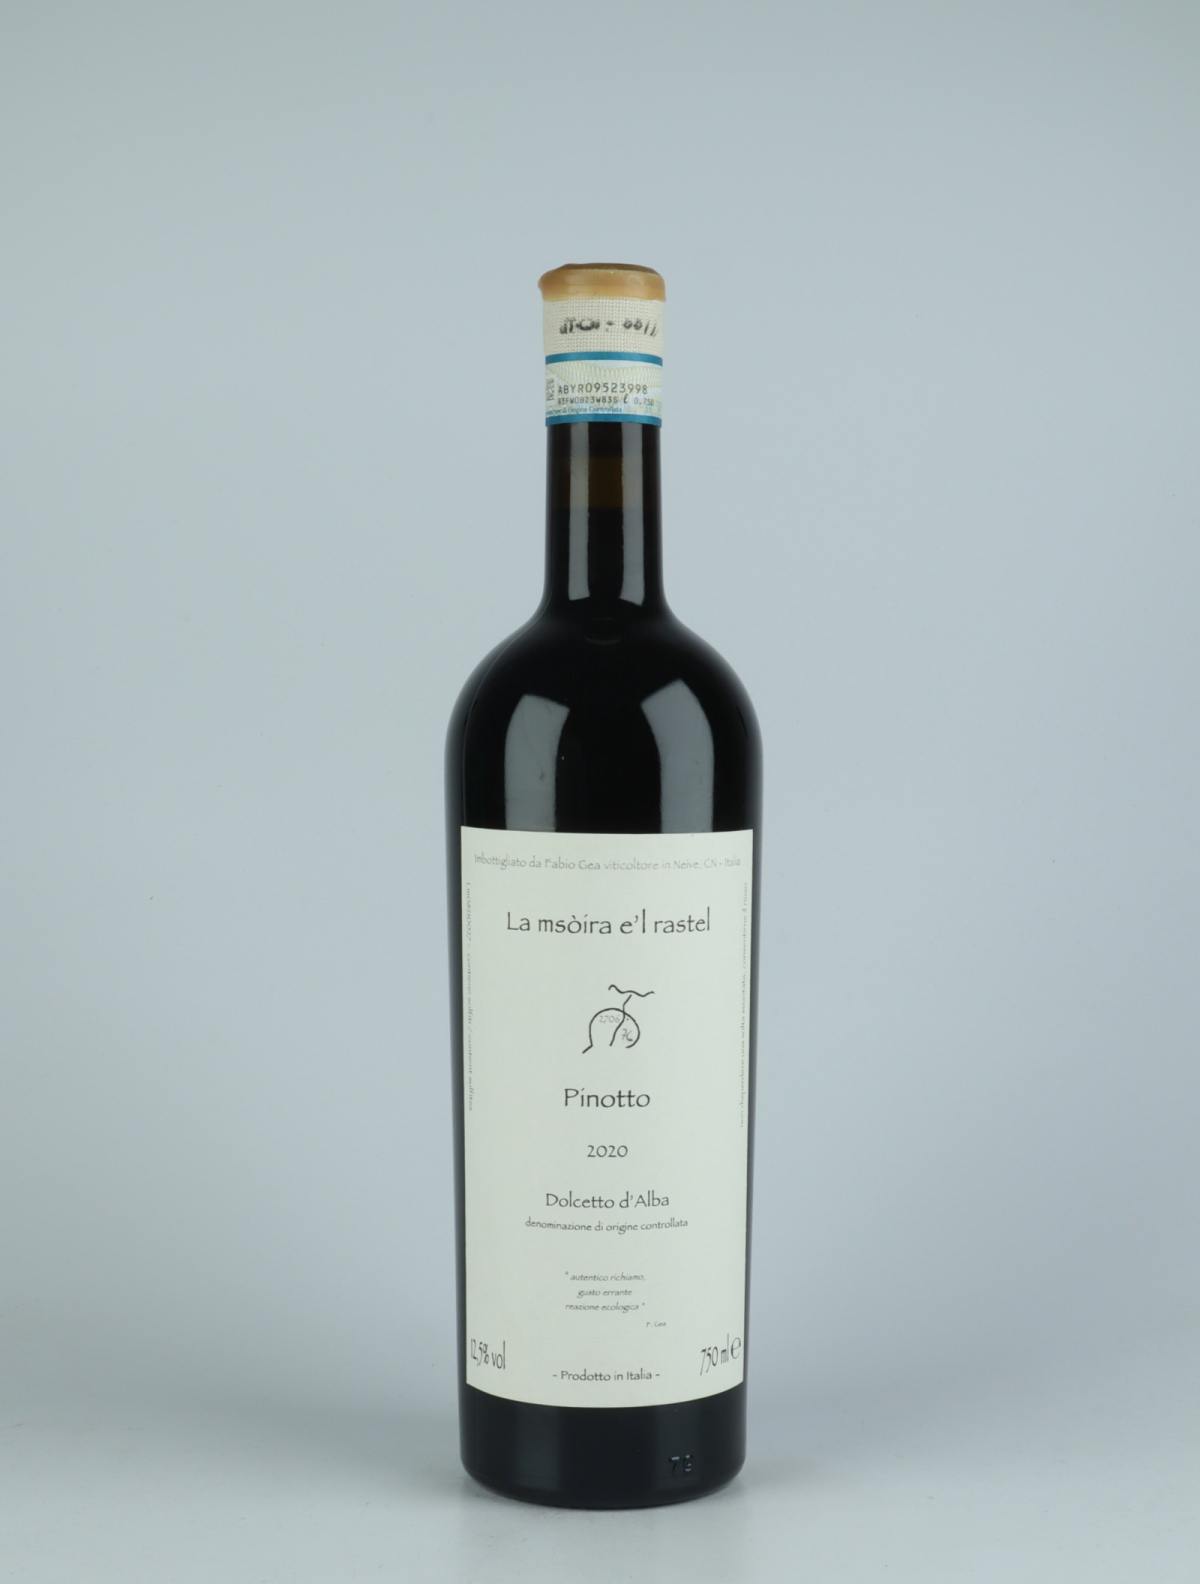 En flaske 2020 Pinotto - Dolcetto d'Alba Rødvin fra Fabio Gea, Piemonte i Italien